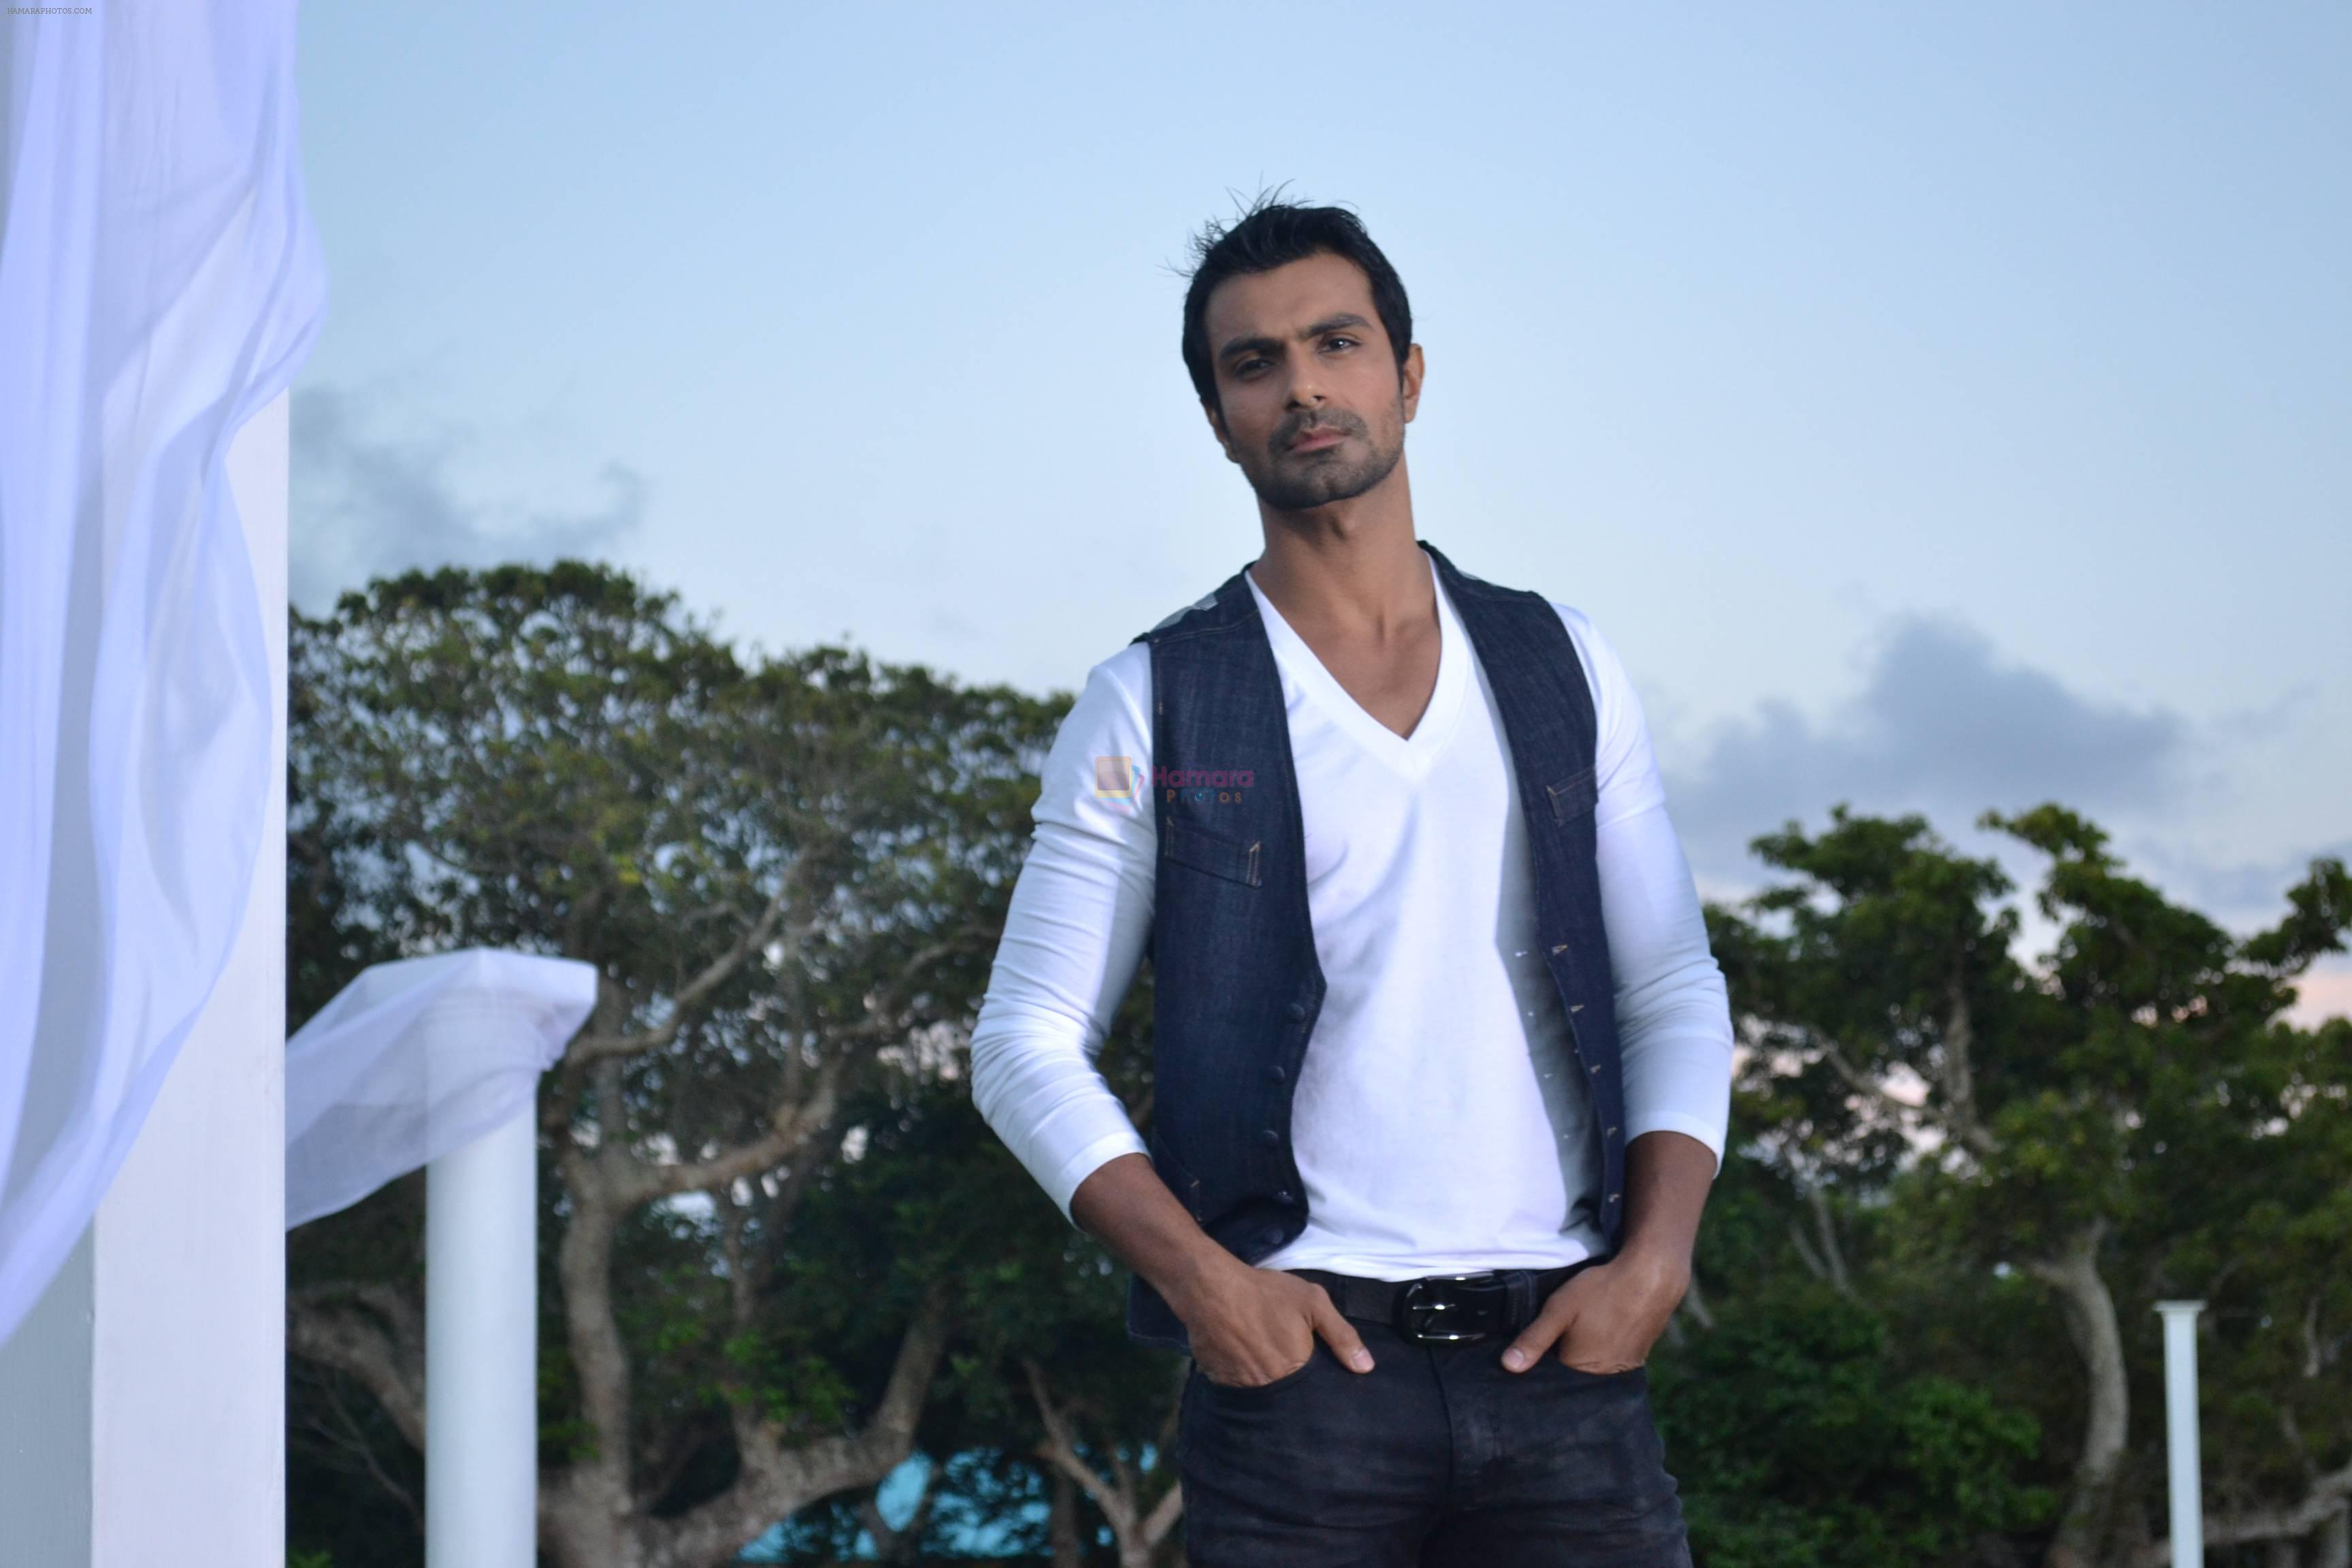 Ashmit Patel peforming Tujhse Alag song in Super Model 